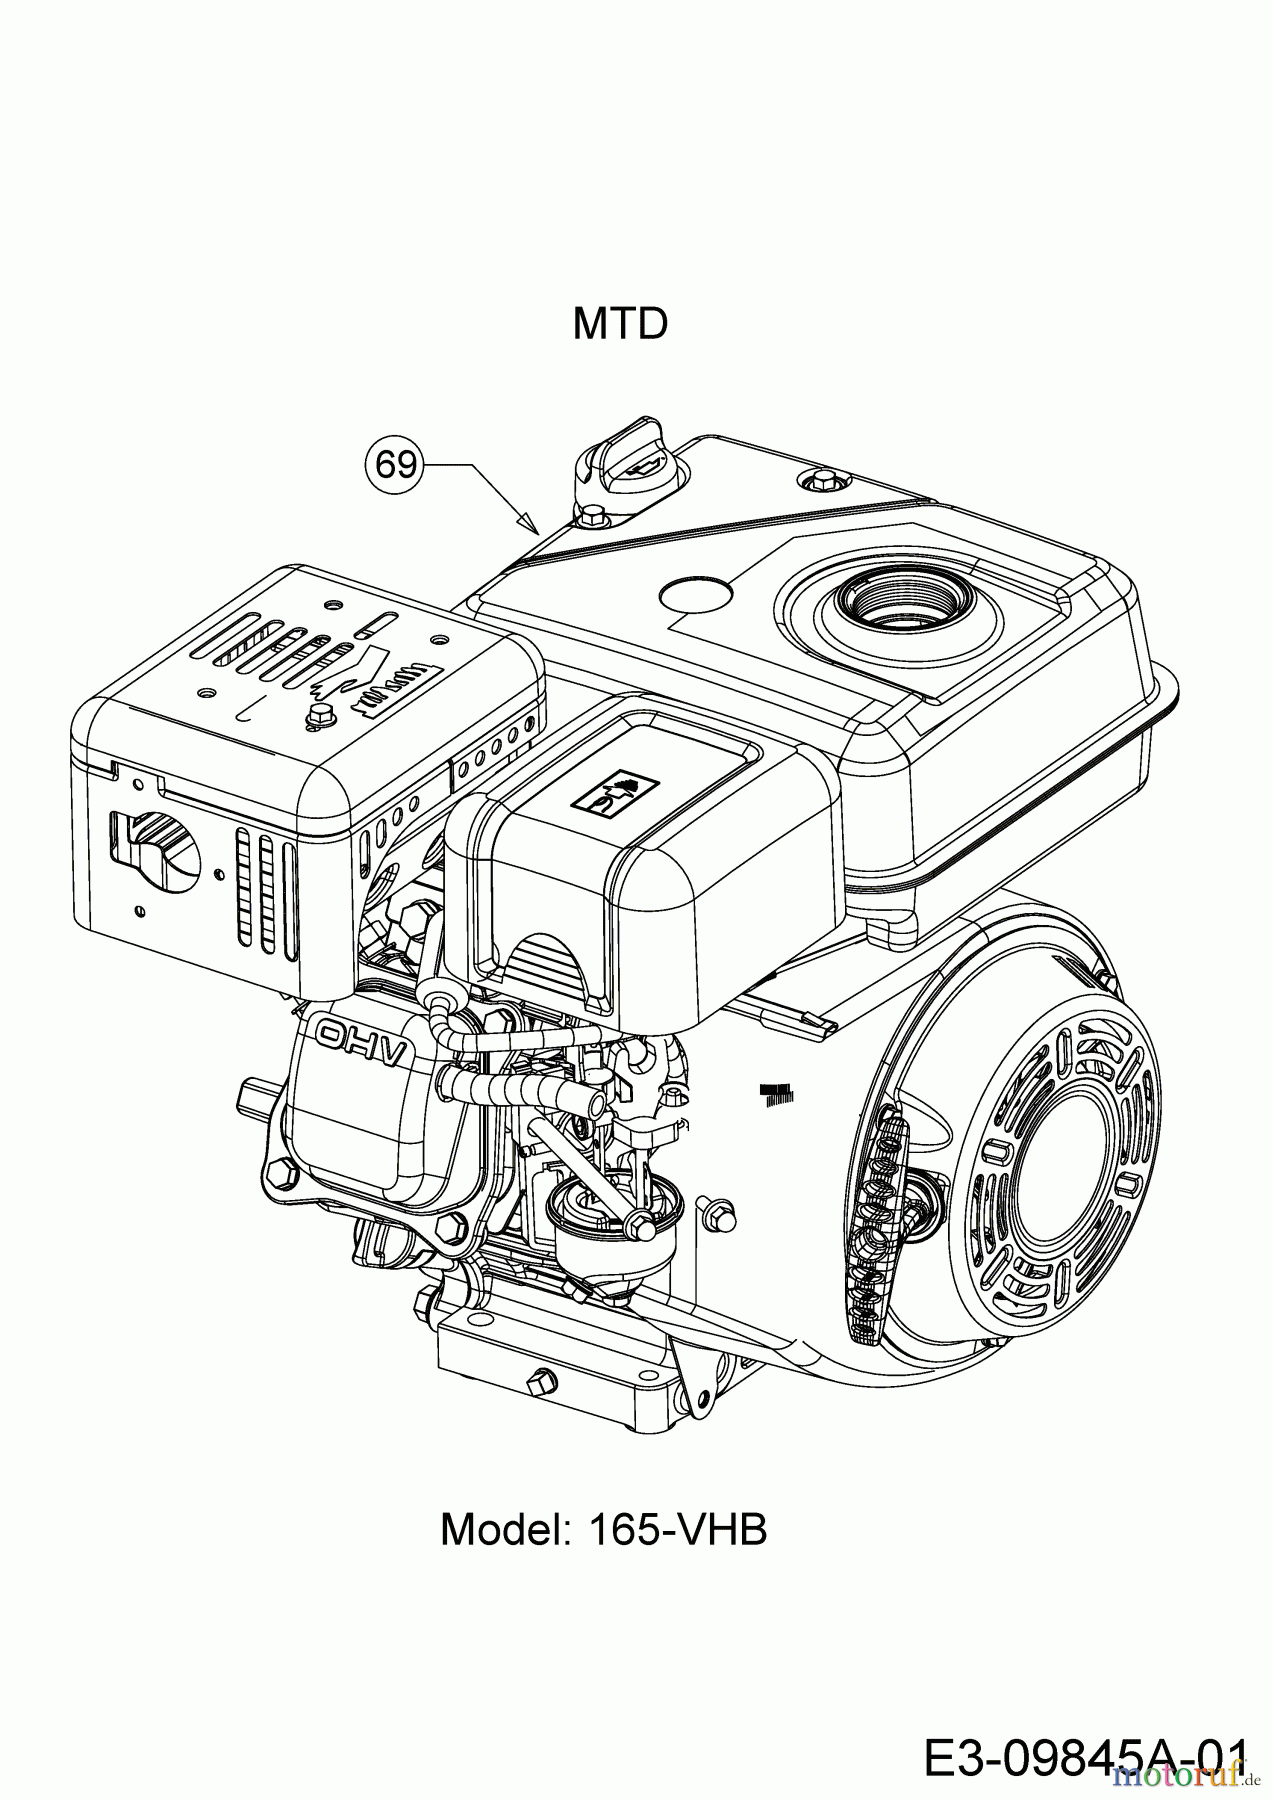  MTD Tillers T/330 M 21D-33MV678  (2020) Engine MTD